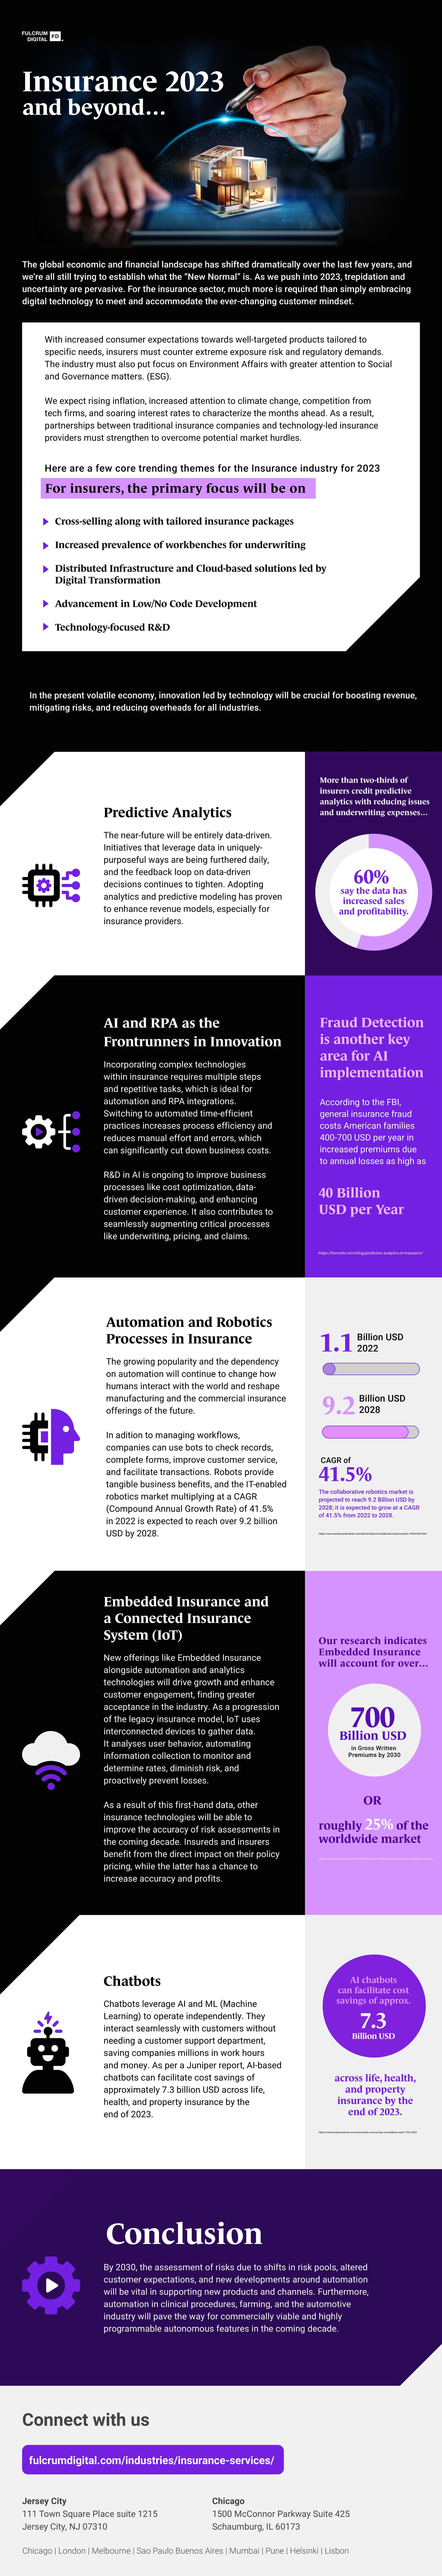 Fulcrum Digital insurance infographic